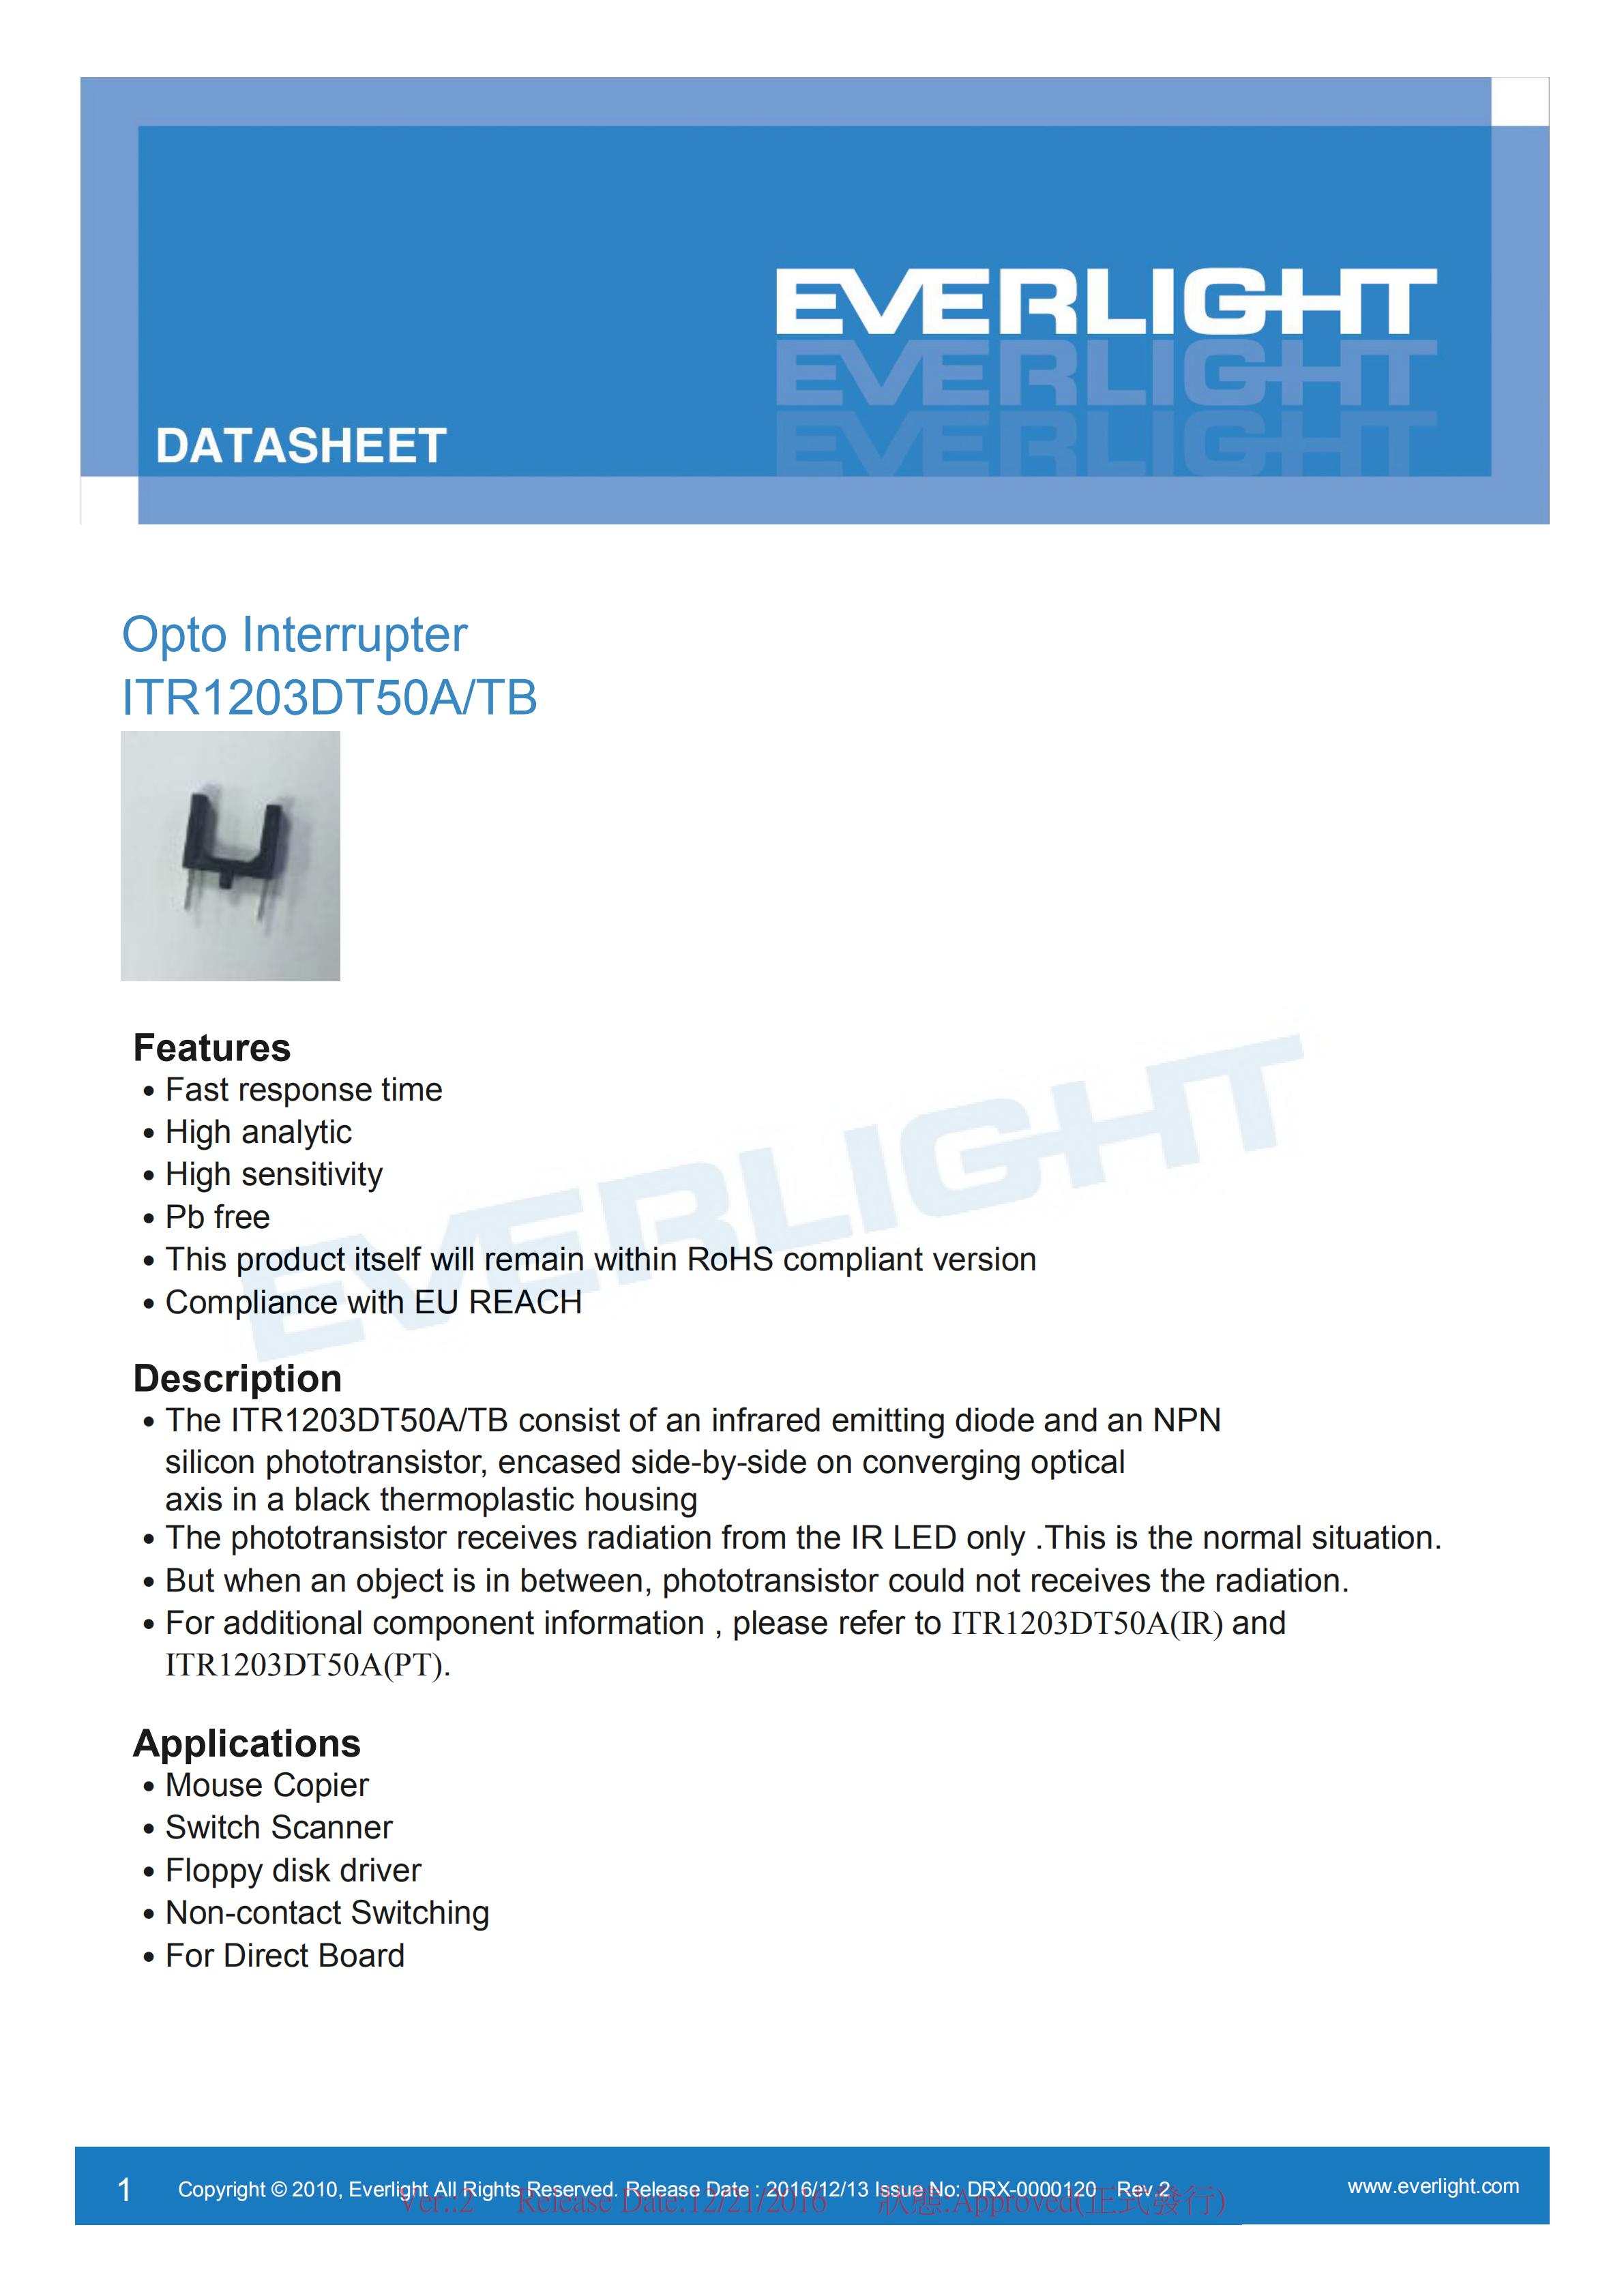 Everlight ITR1203DT50A/TB DIP Optical Sensors